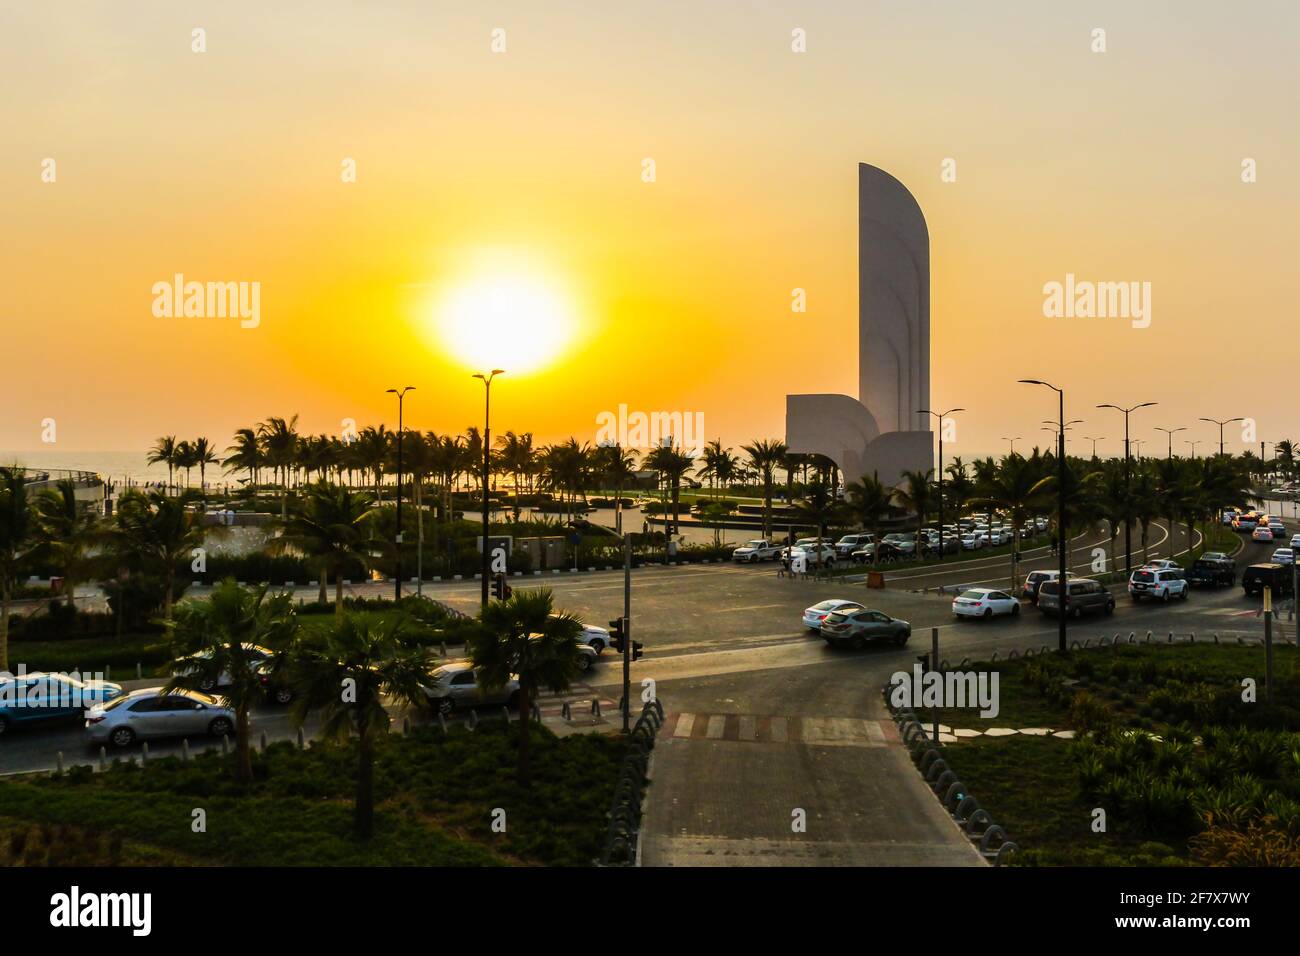 jeddah corniche new beach Stock Photo